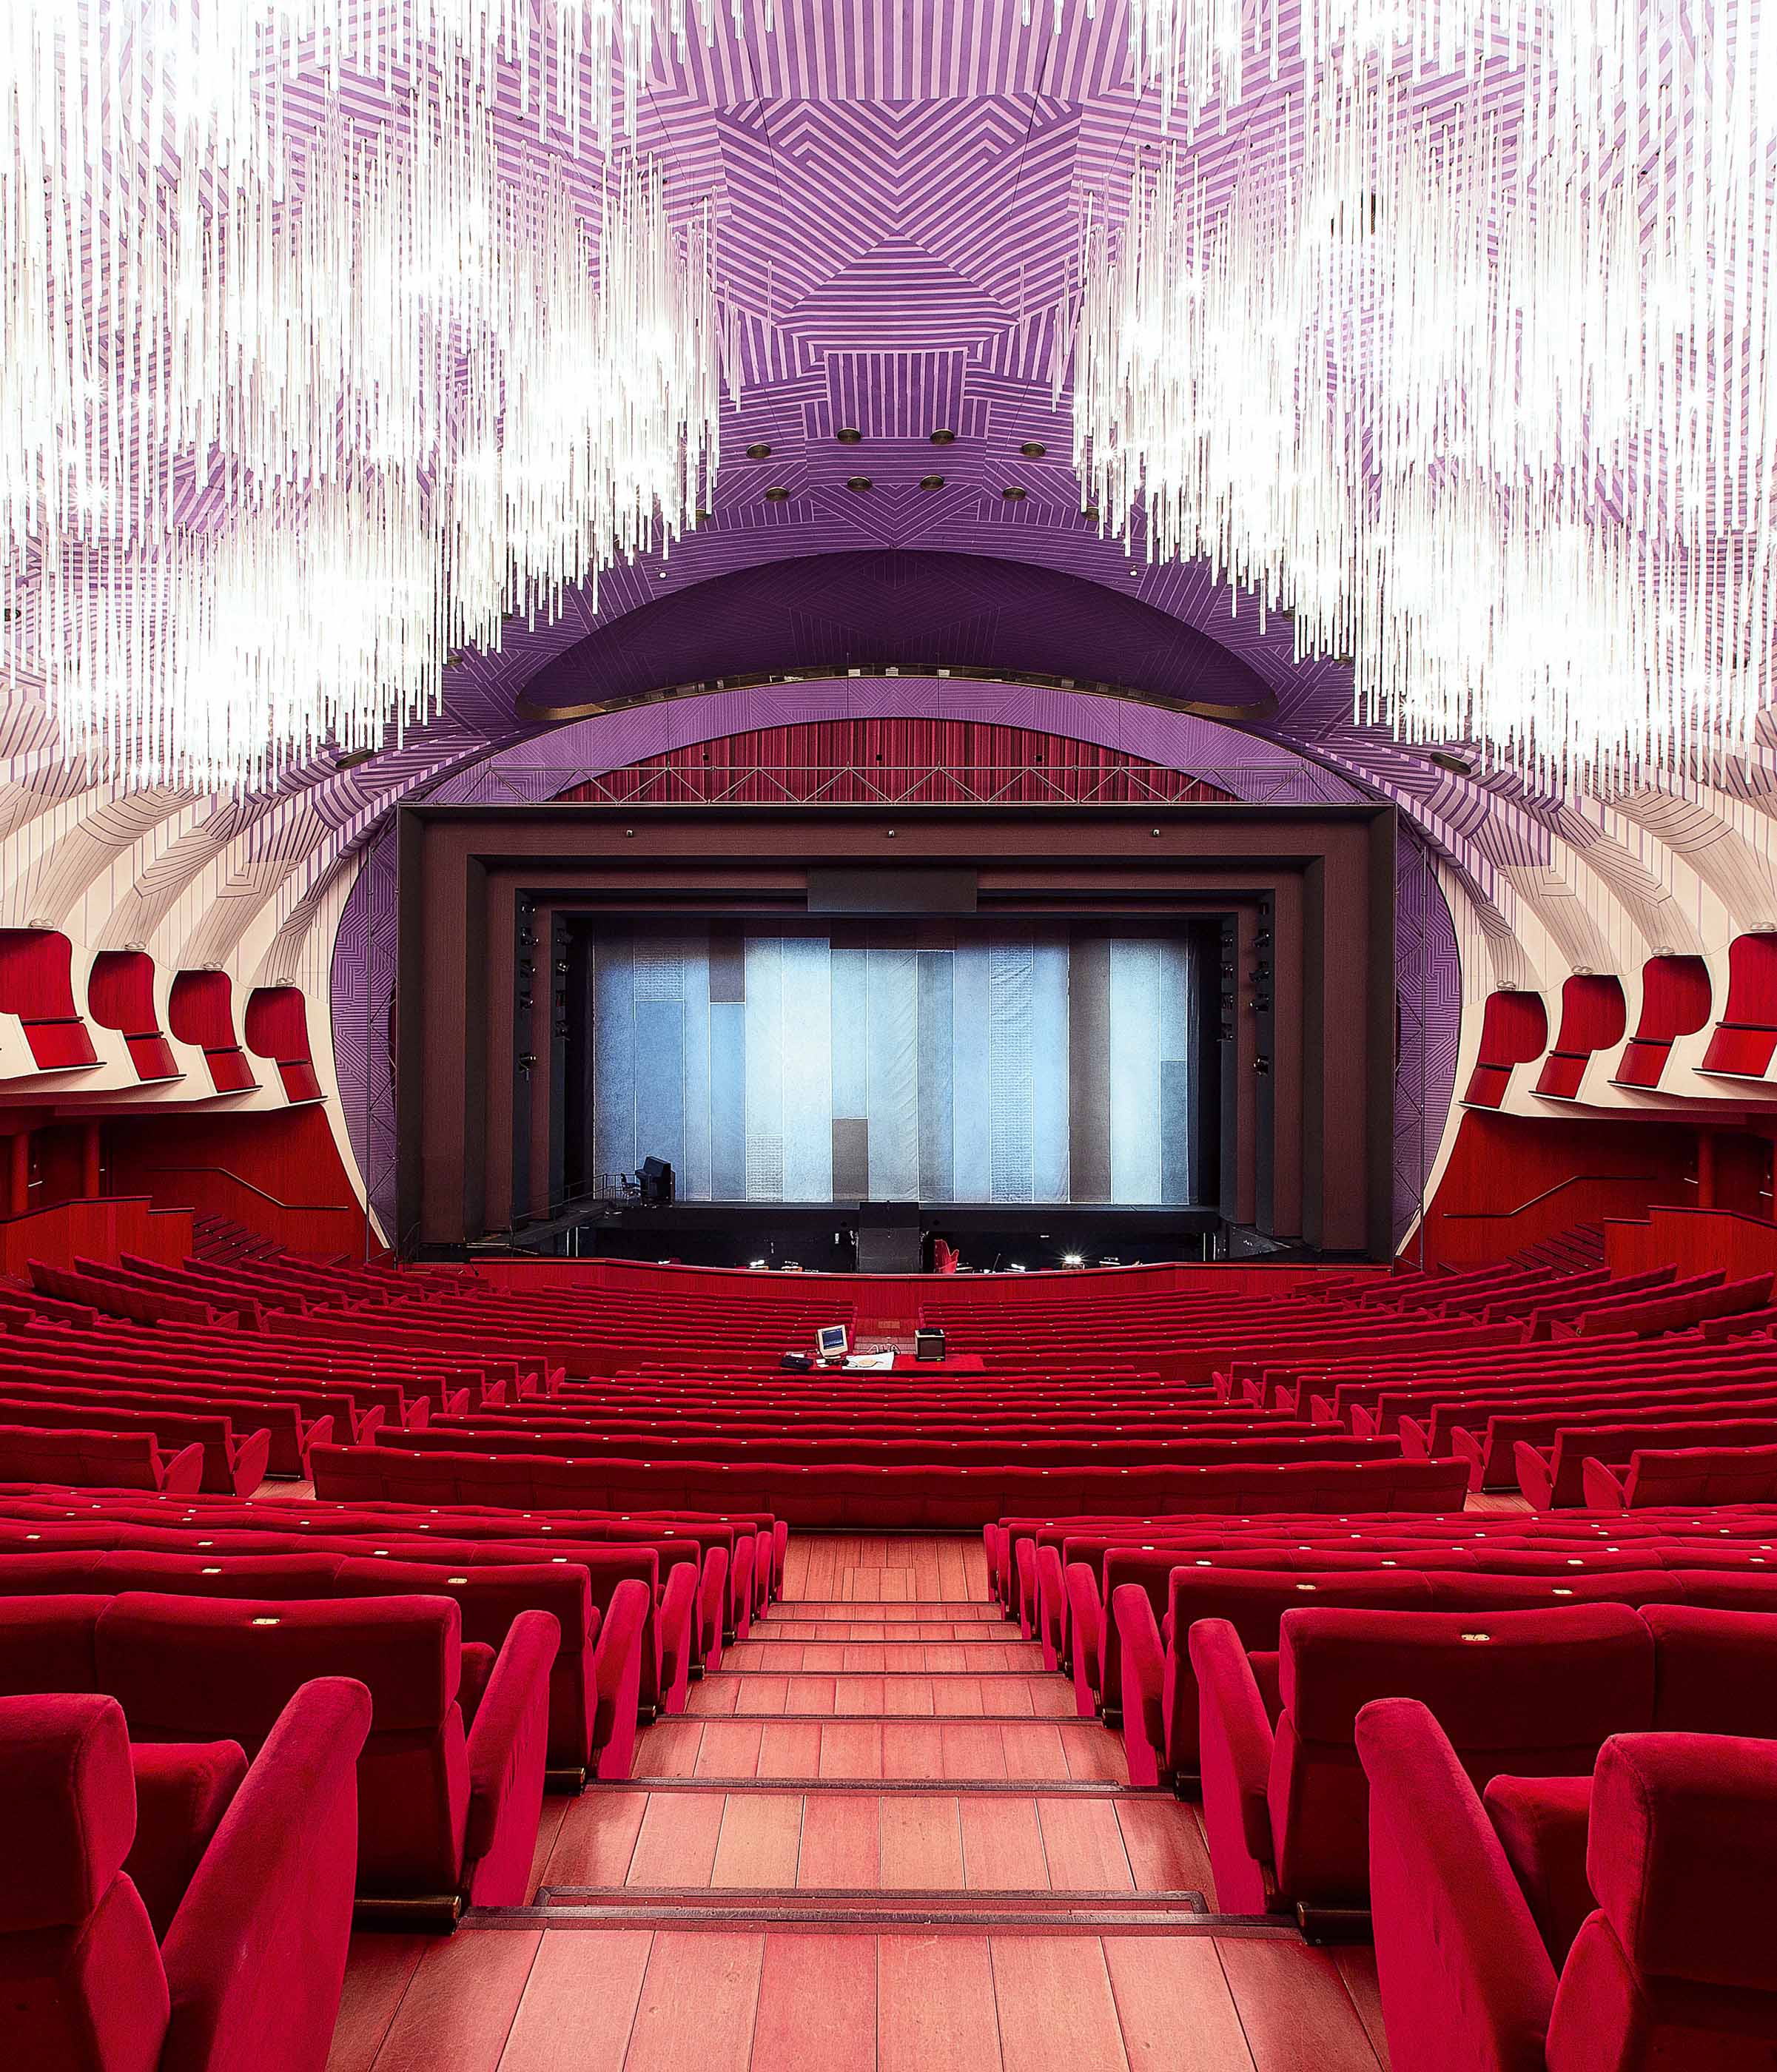 A bold Alcantara curtain dominates the stage in 2017 at the&nbsp;Teatro Regio Torino in Turin, Italy.